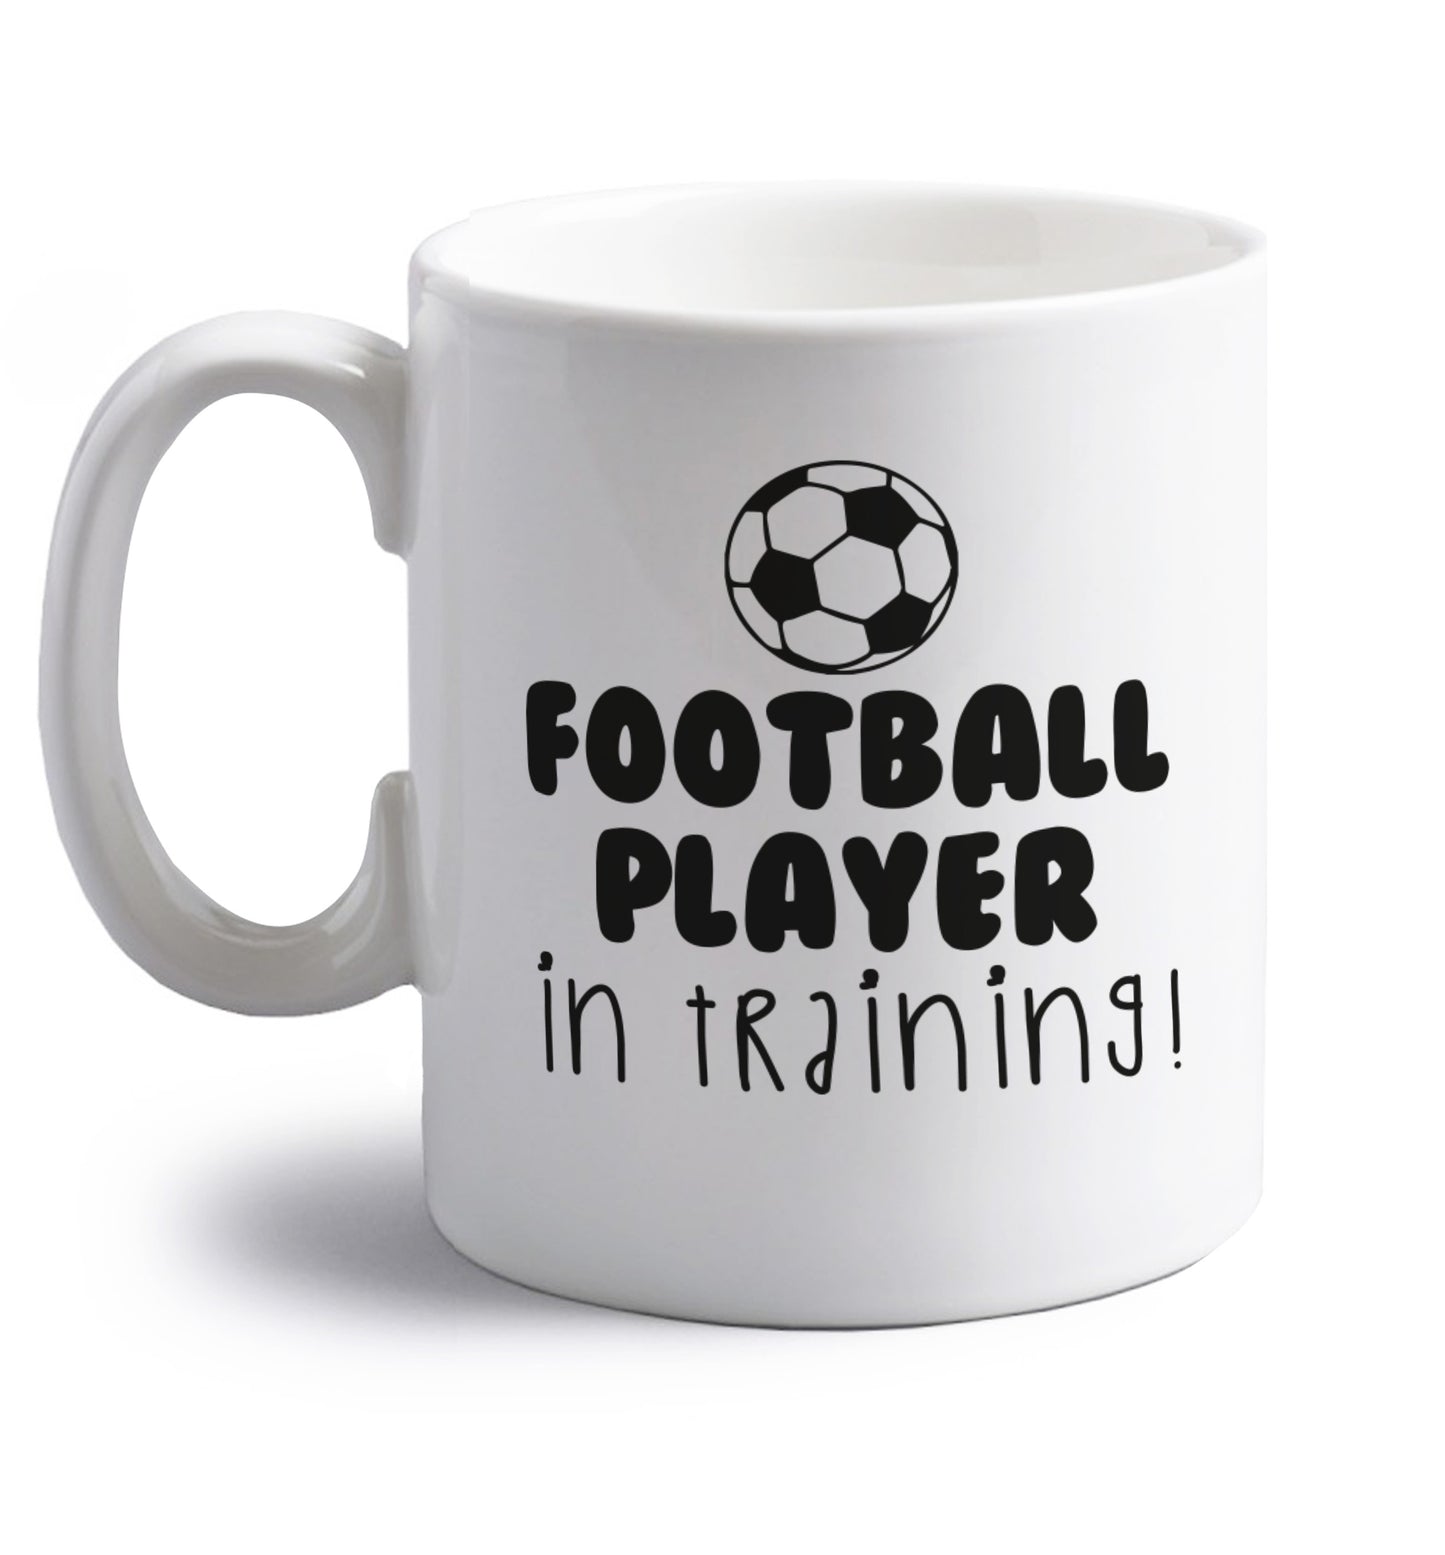 Football player in training right handed white ceramic mug 